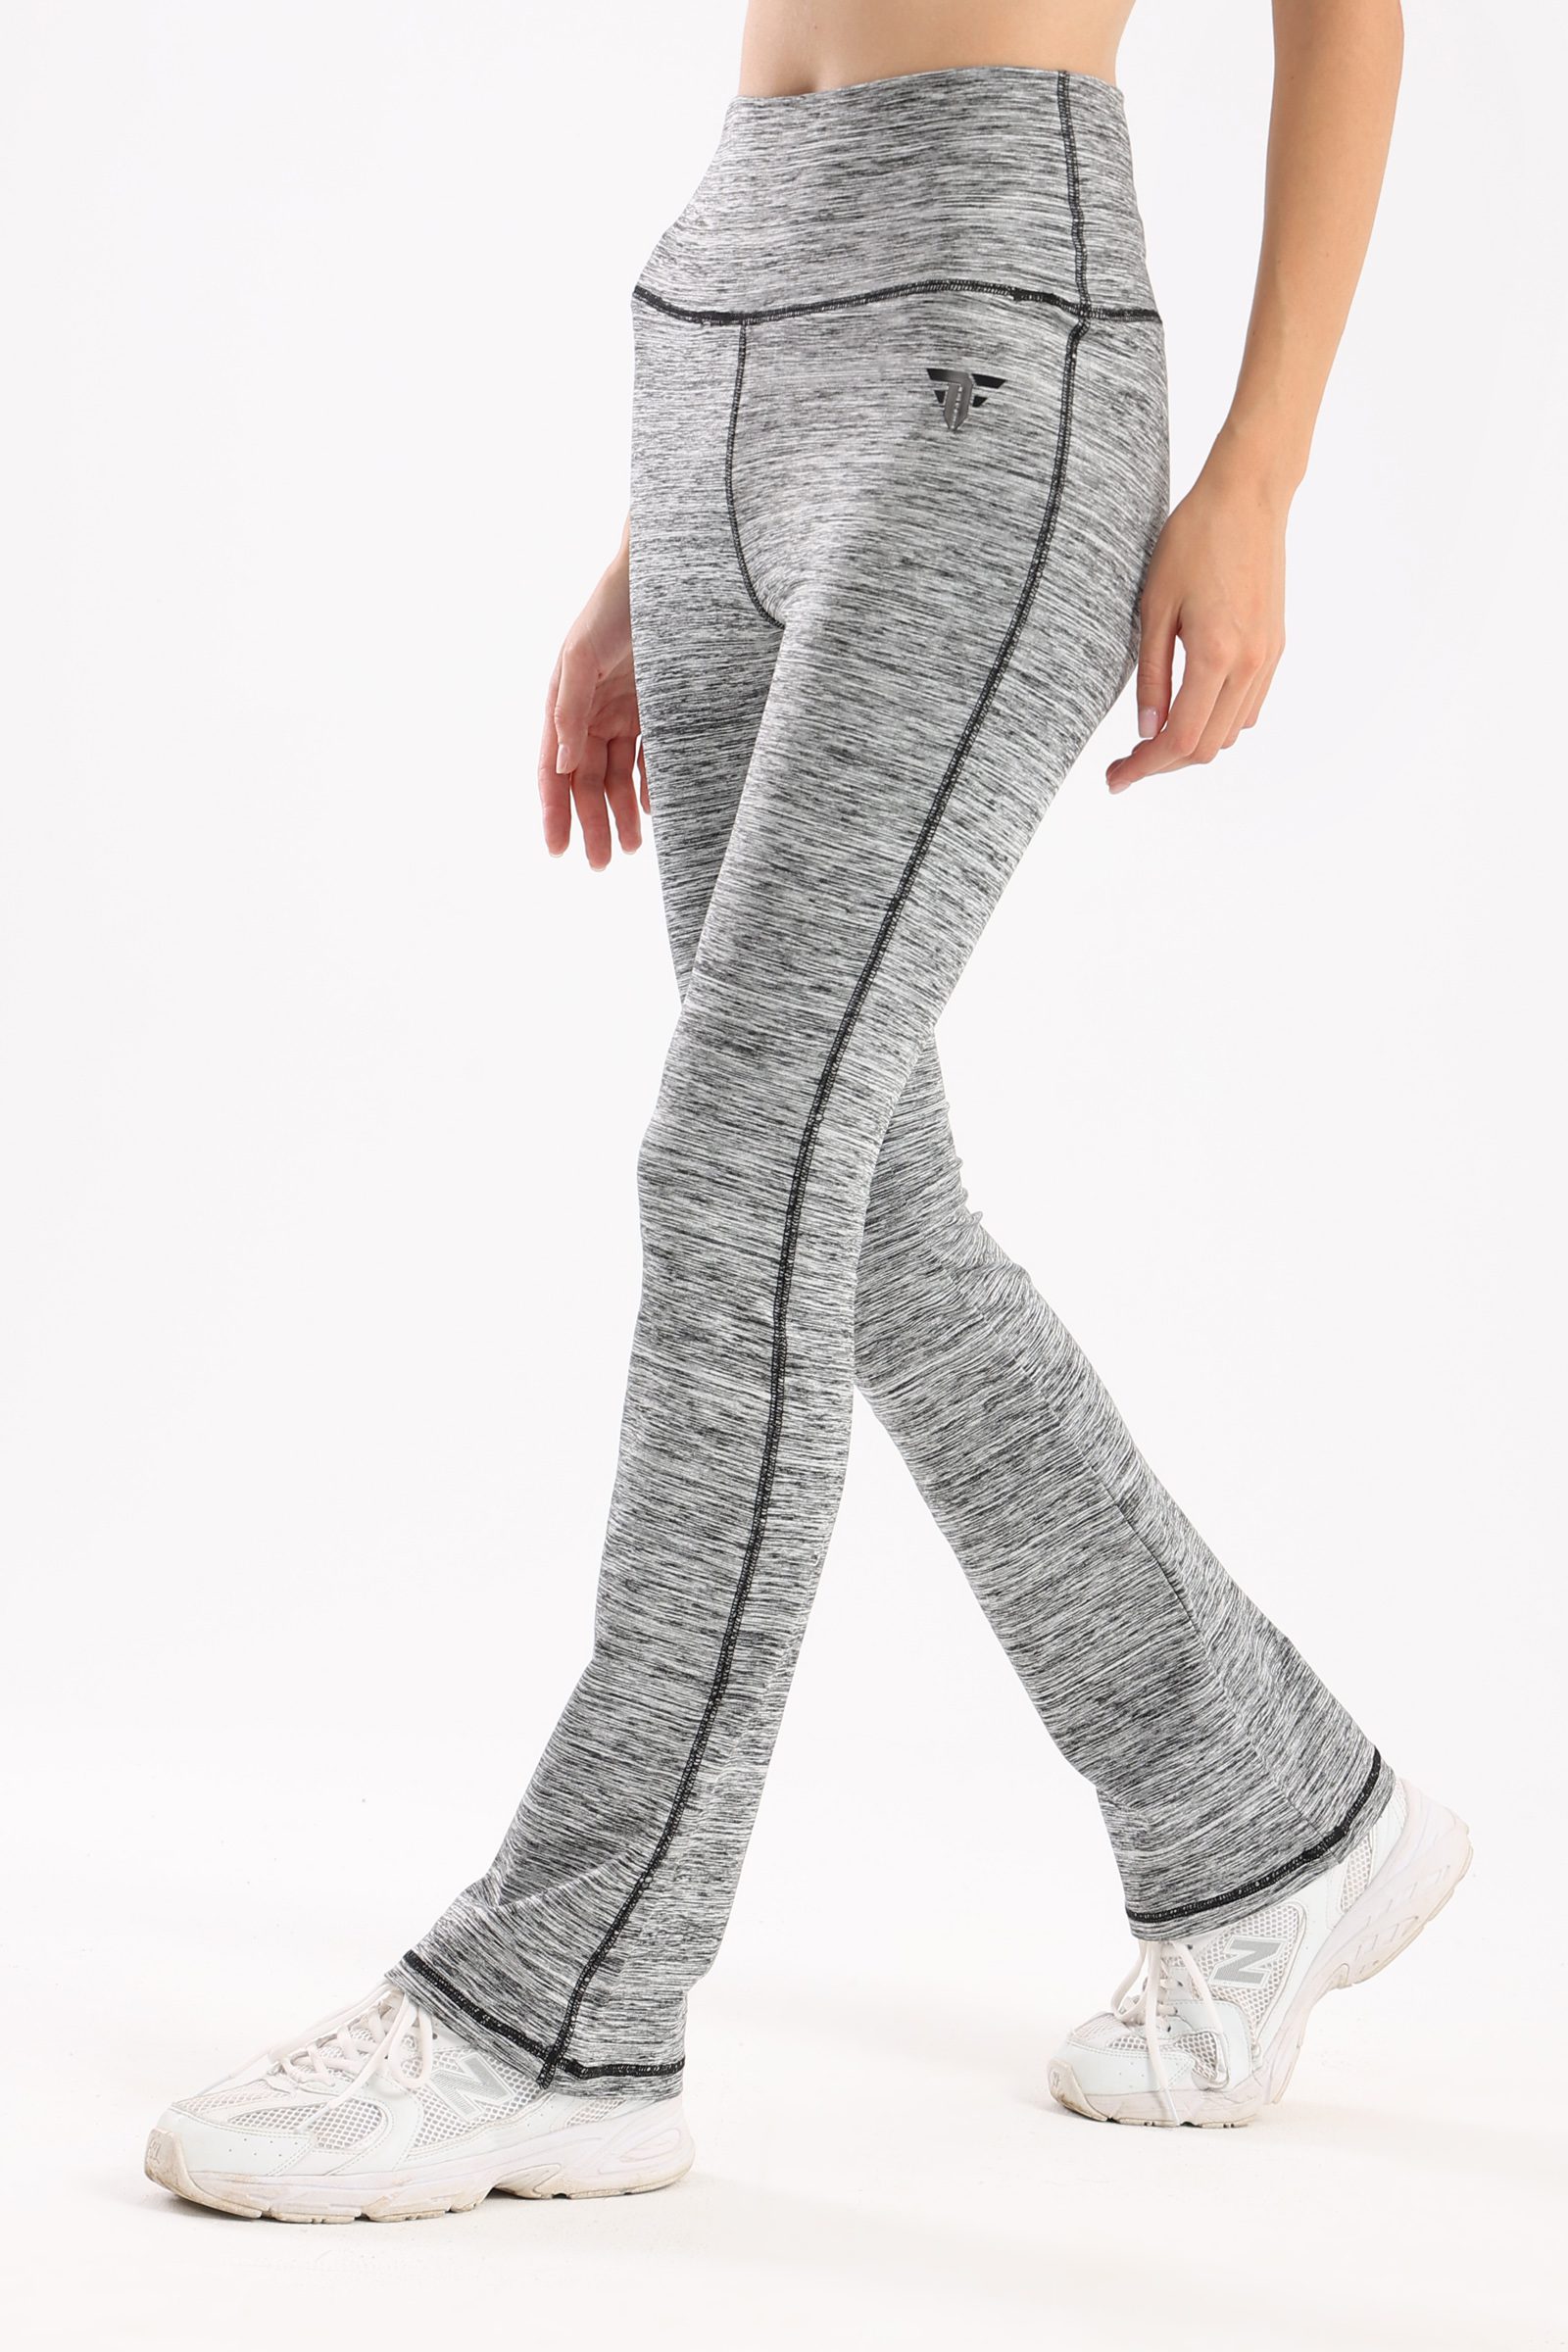 Ash grey heather yoga flare pants – Fit Freak